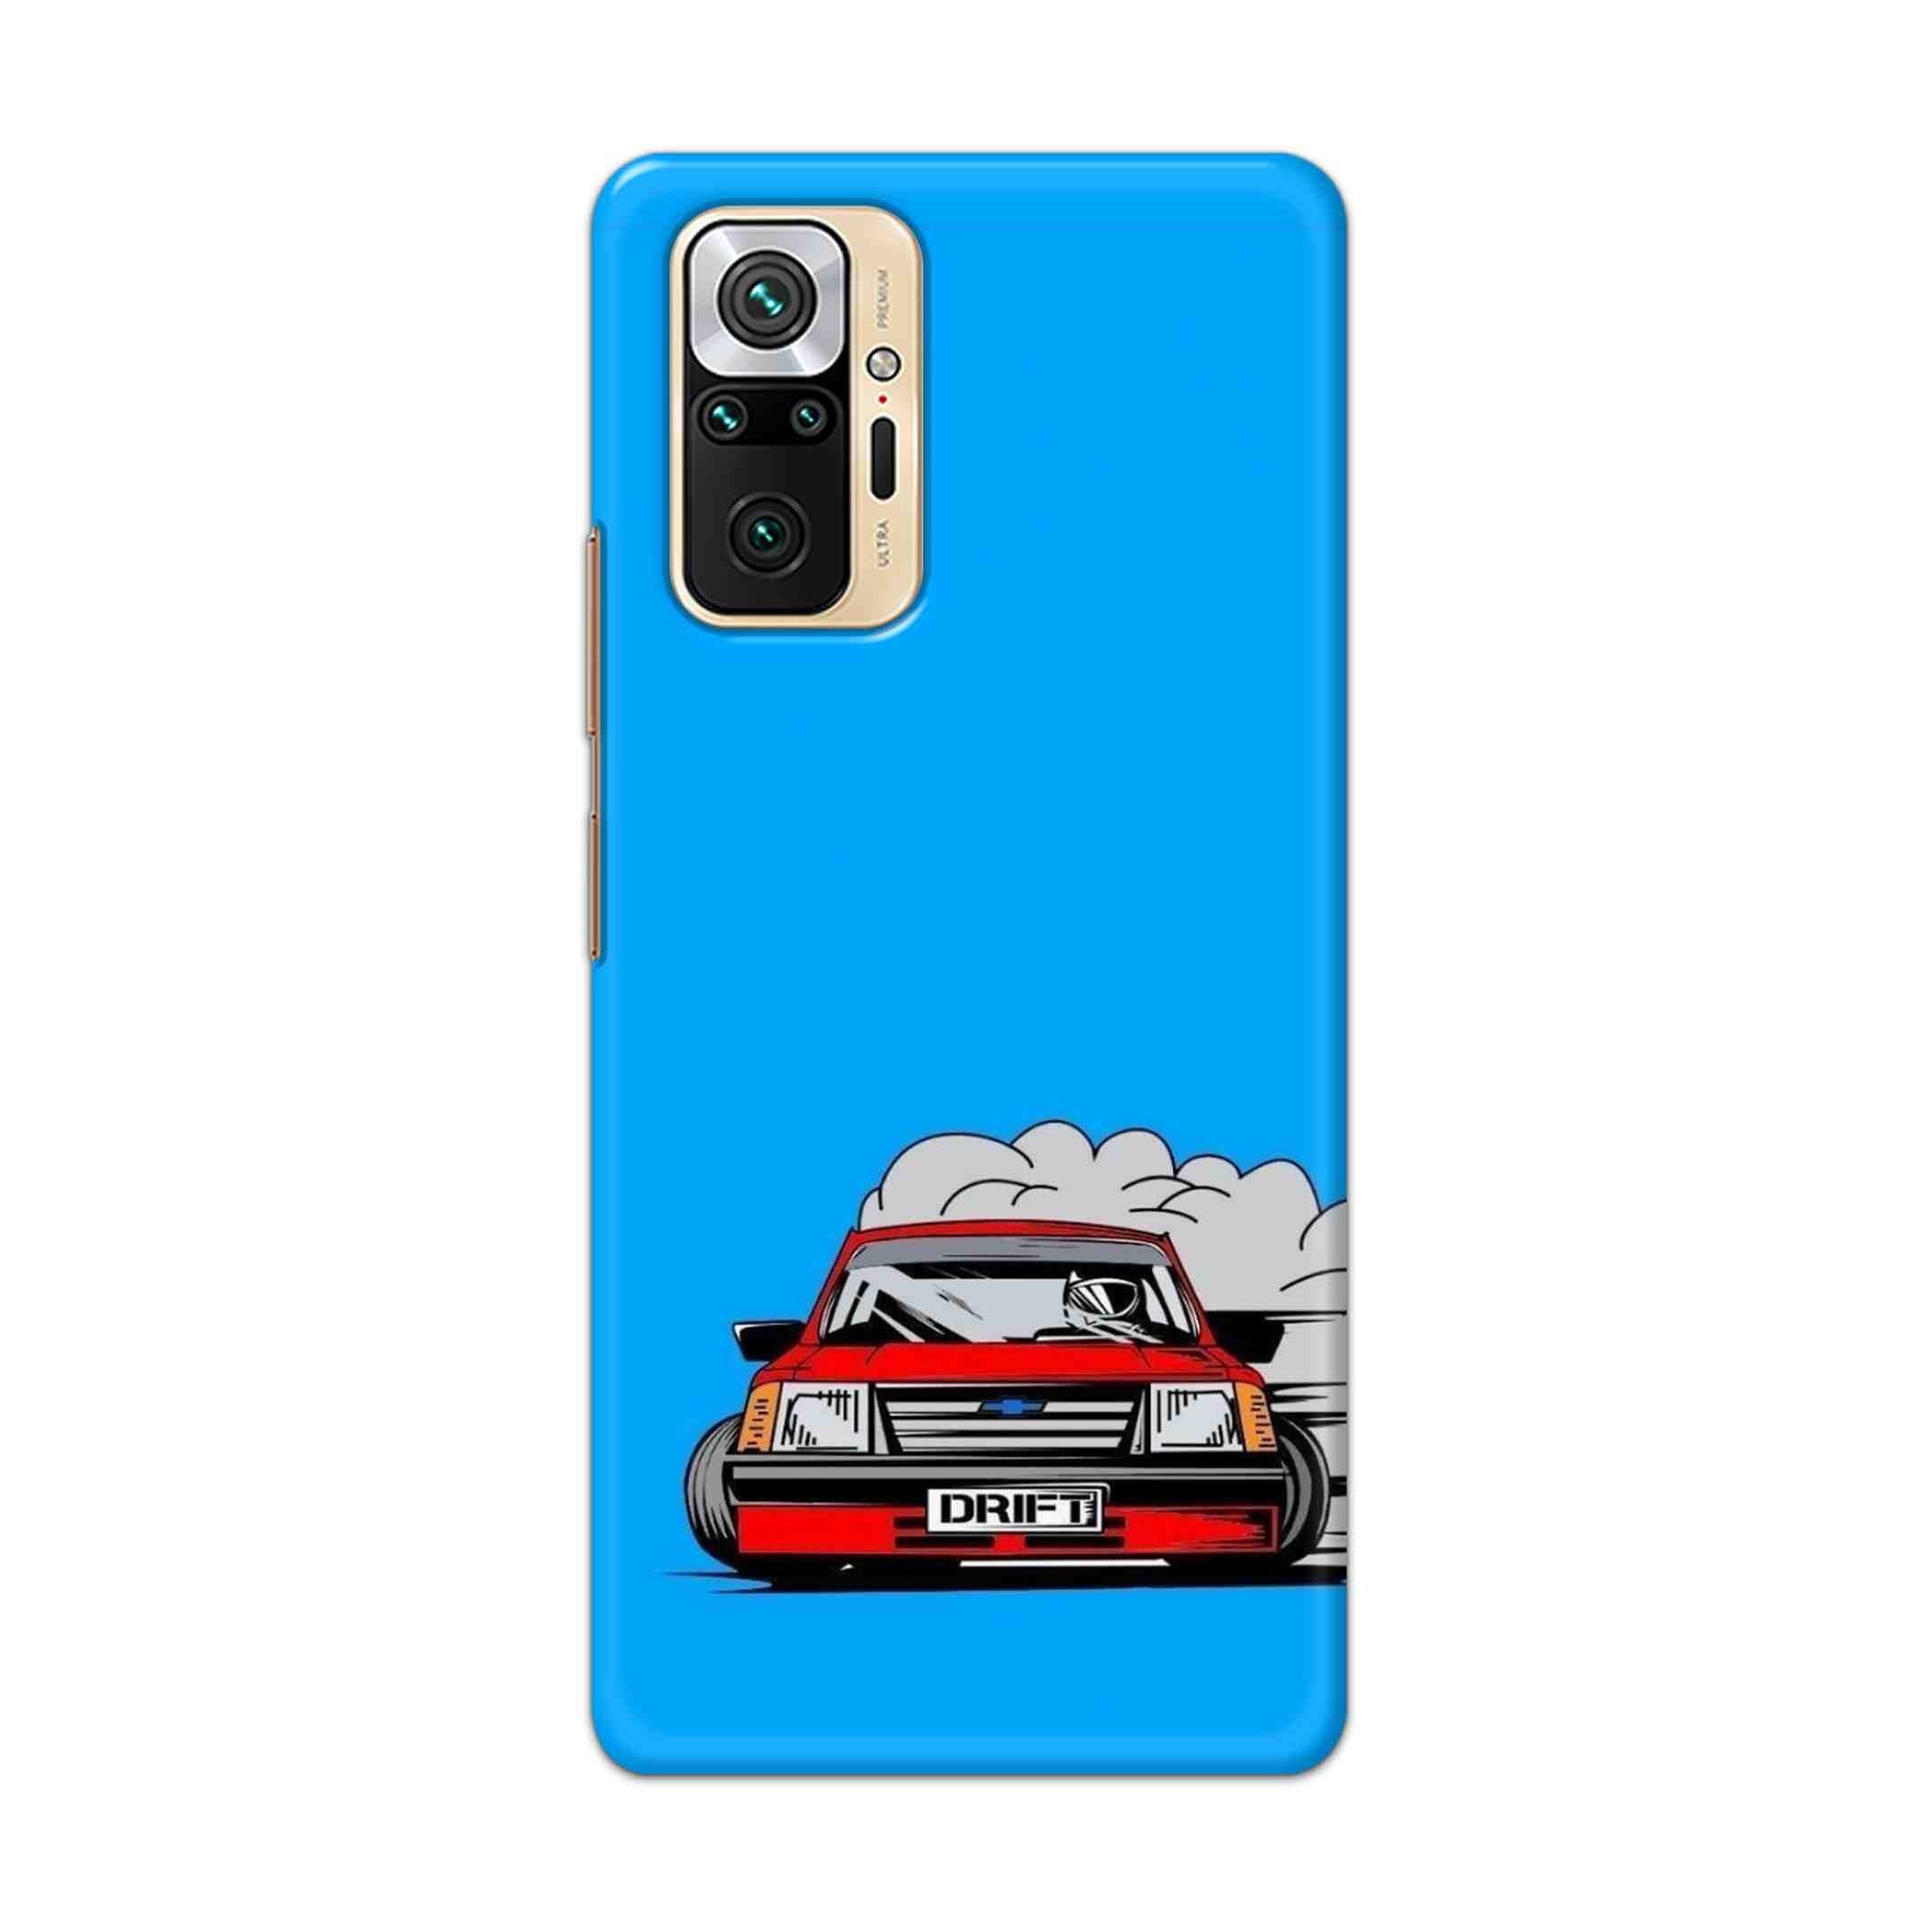 Buy Drift Hard Back Mobile Phone Case Cover For Redmi Note 10 Pro Online